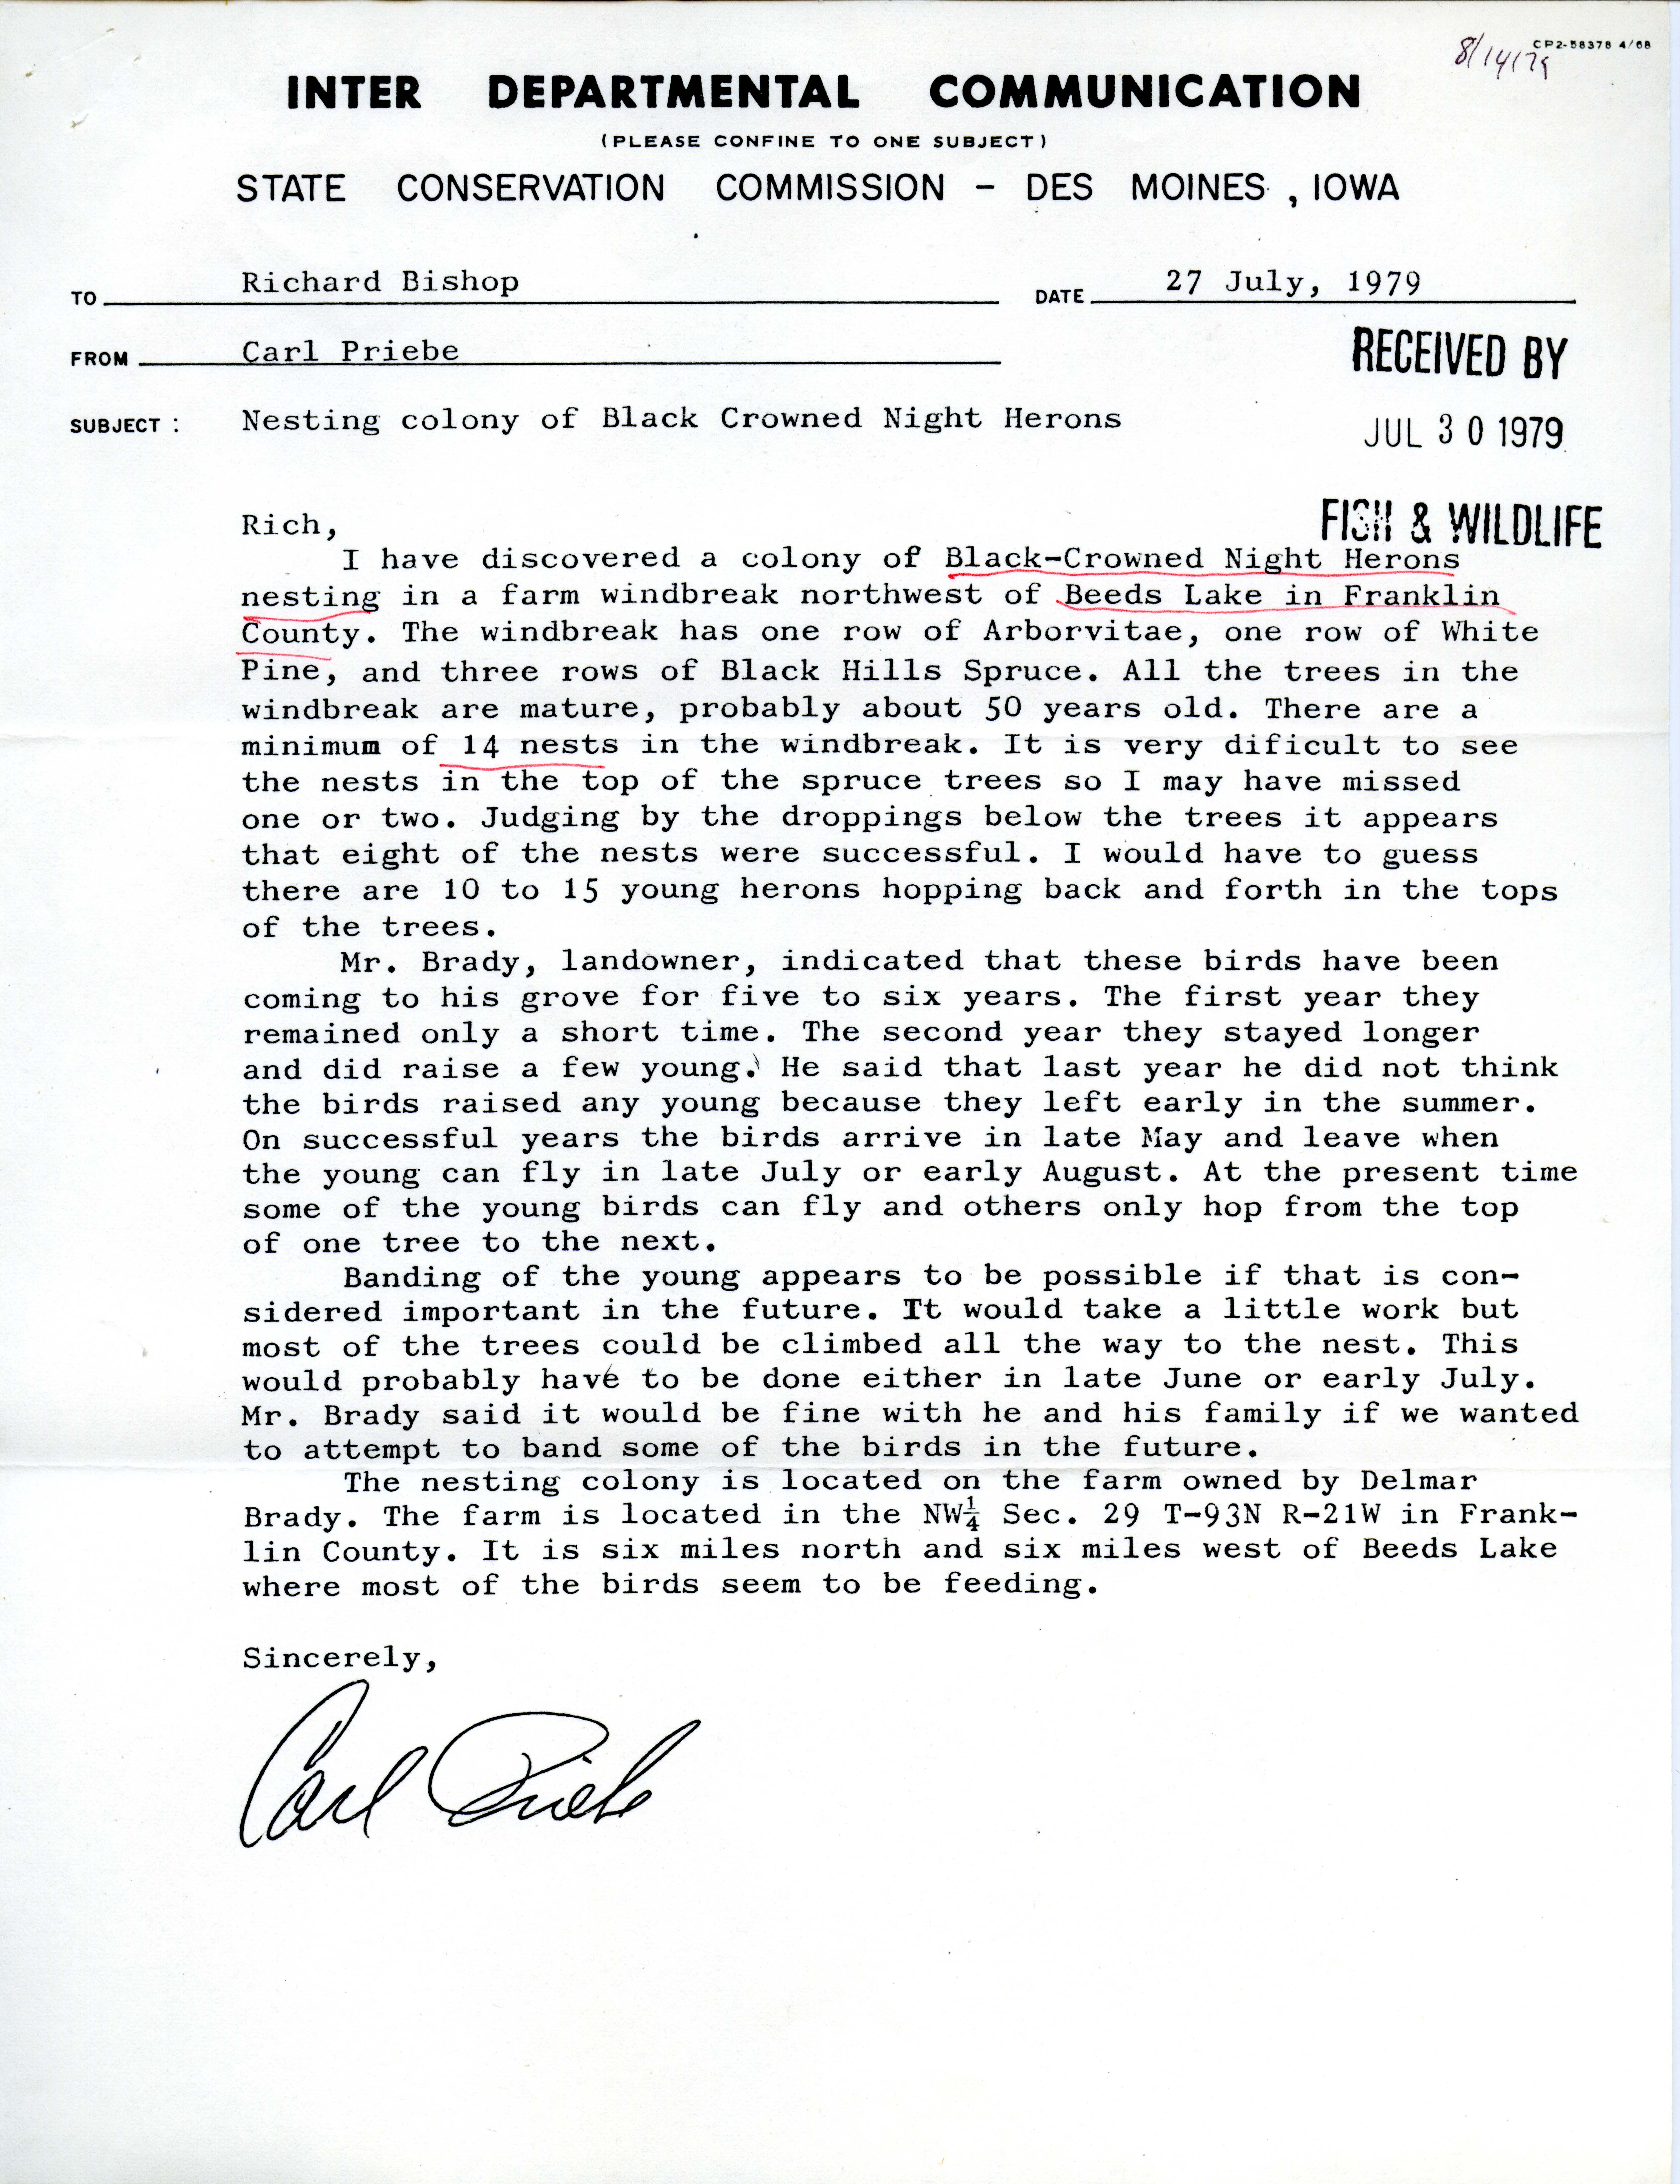 Carl Priebe letter to Richard Bishop regarding bird sightings, July 27, 1979